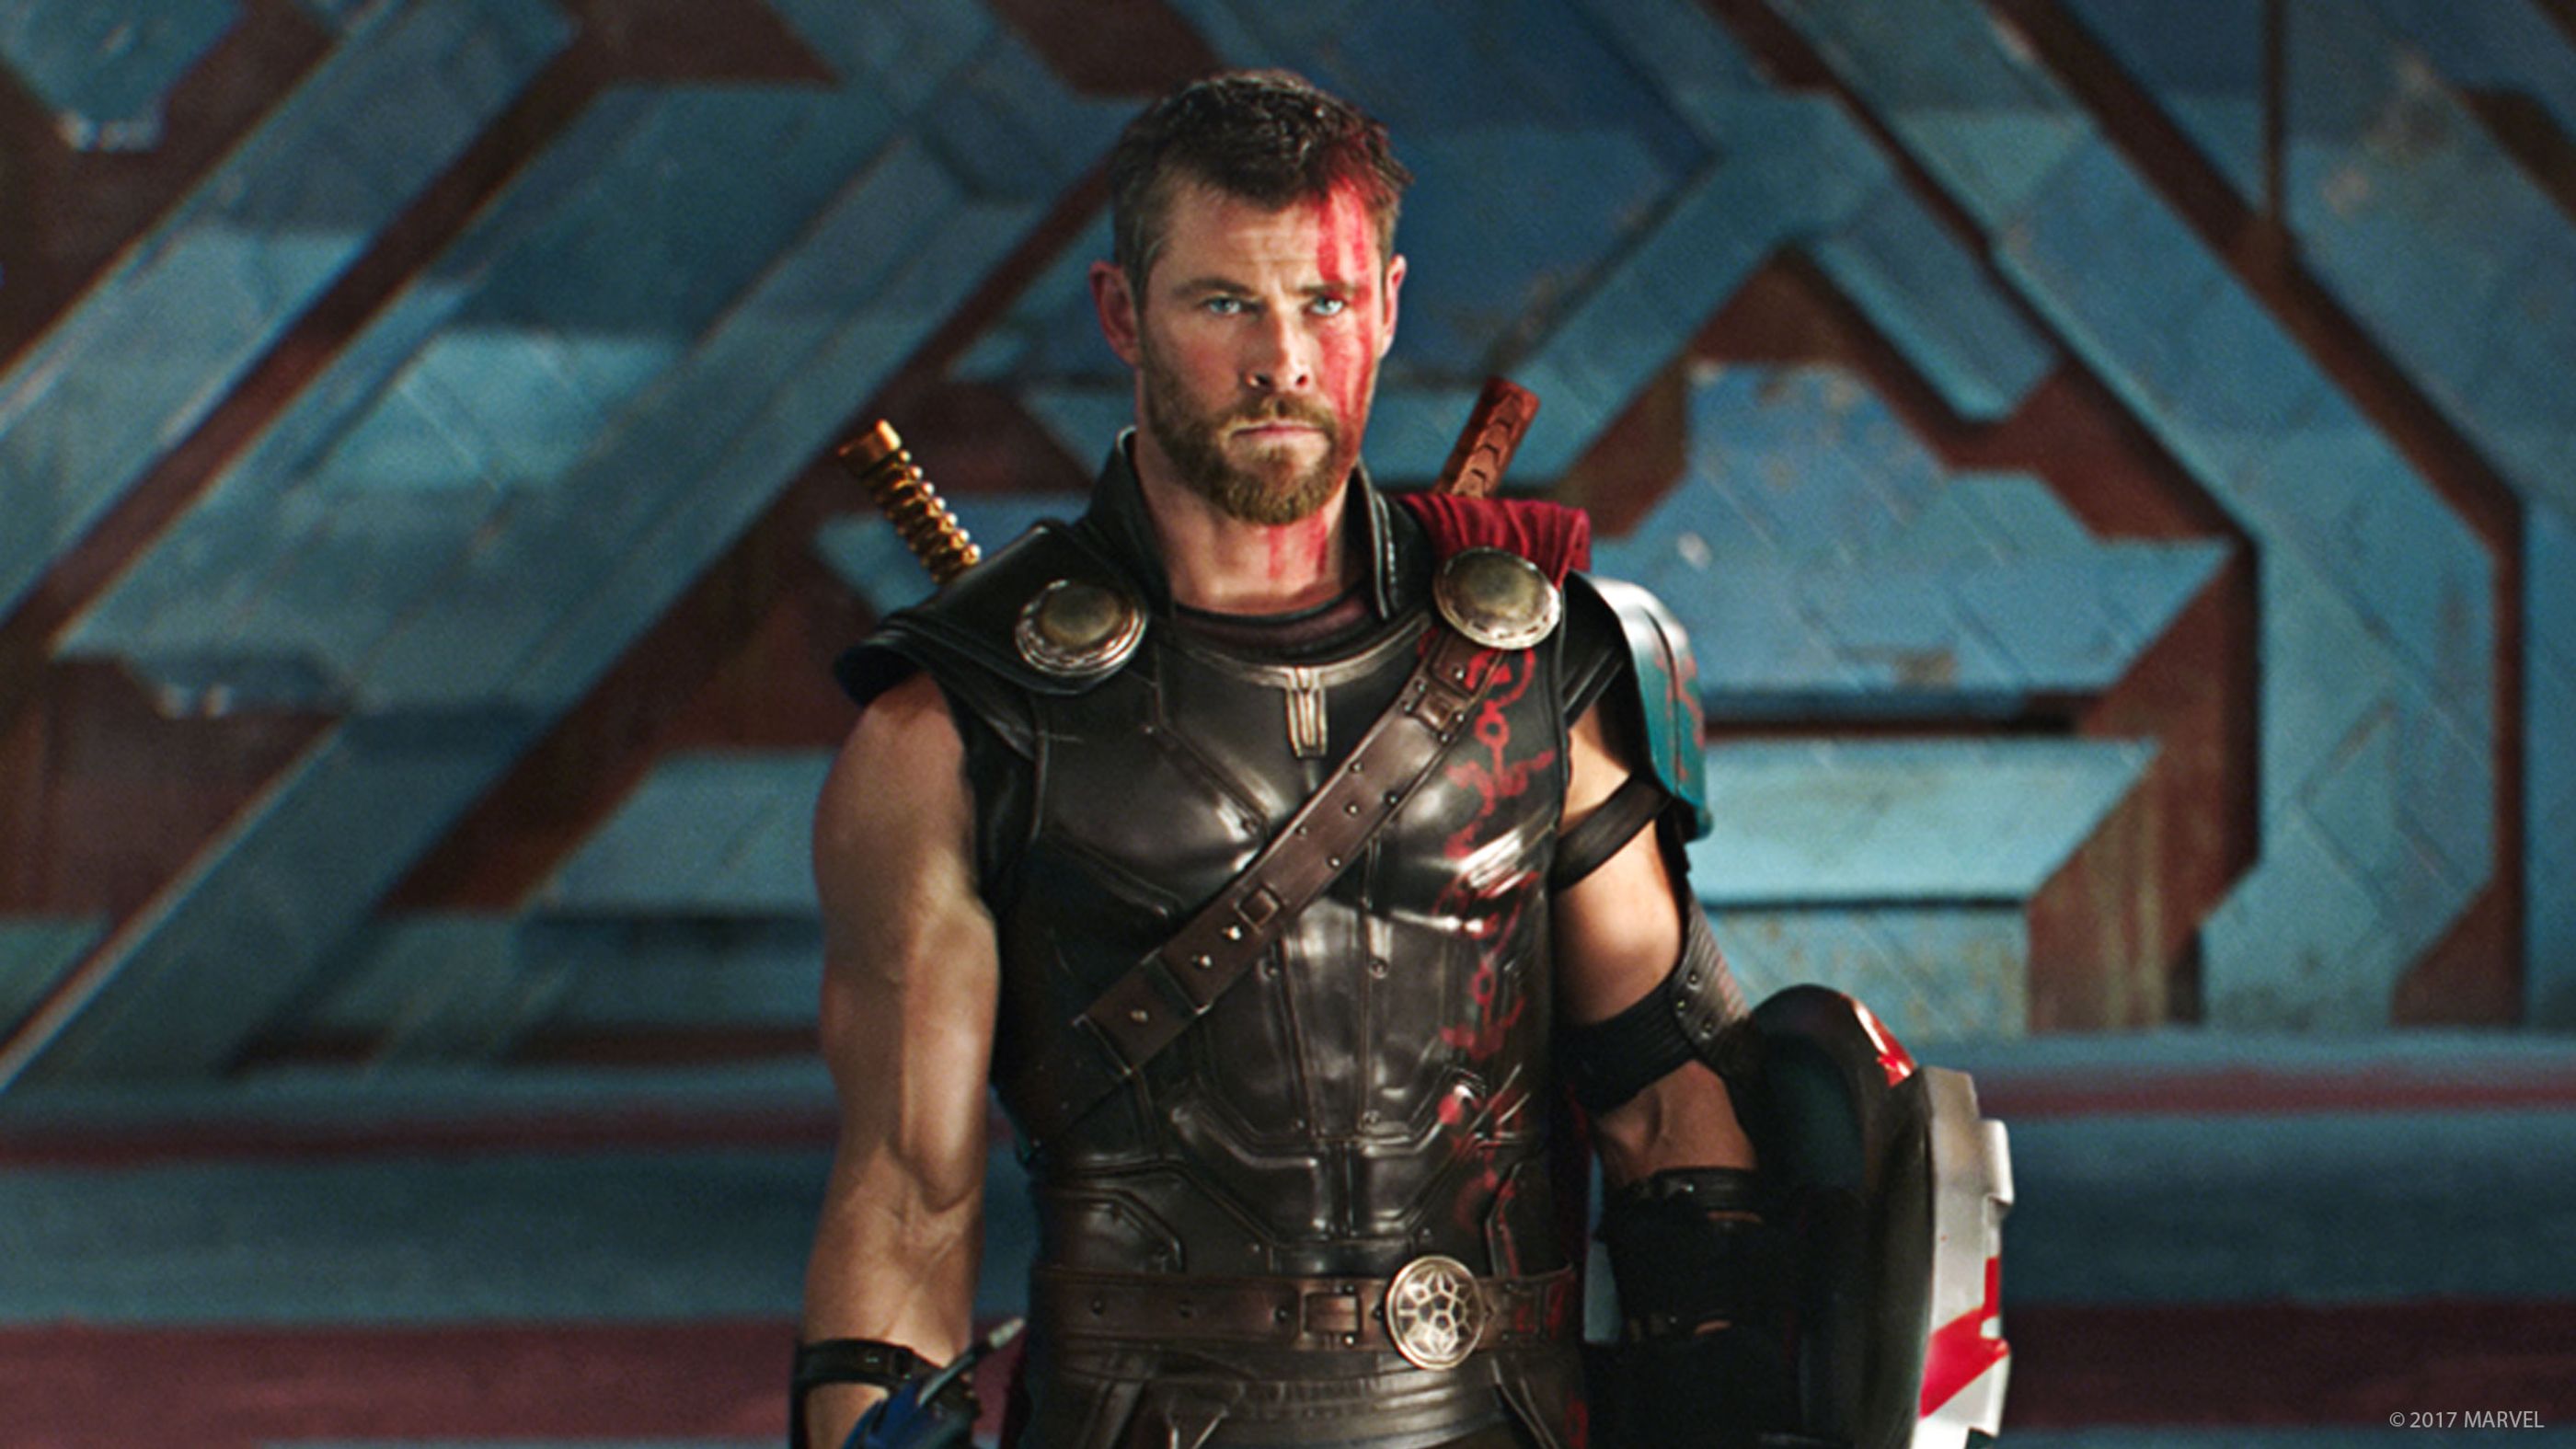 Thor: Ragnarok Teaser Trailer [HD] 